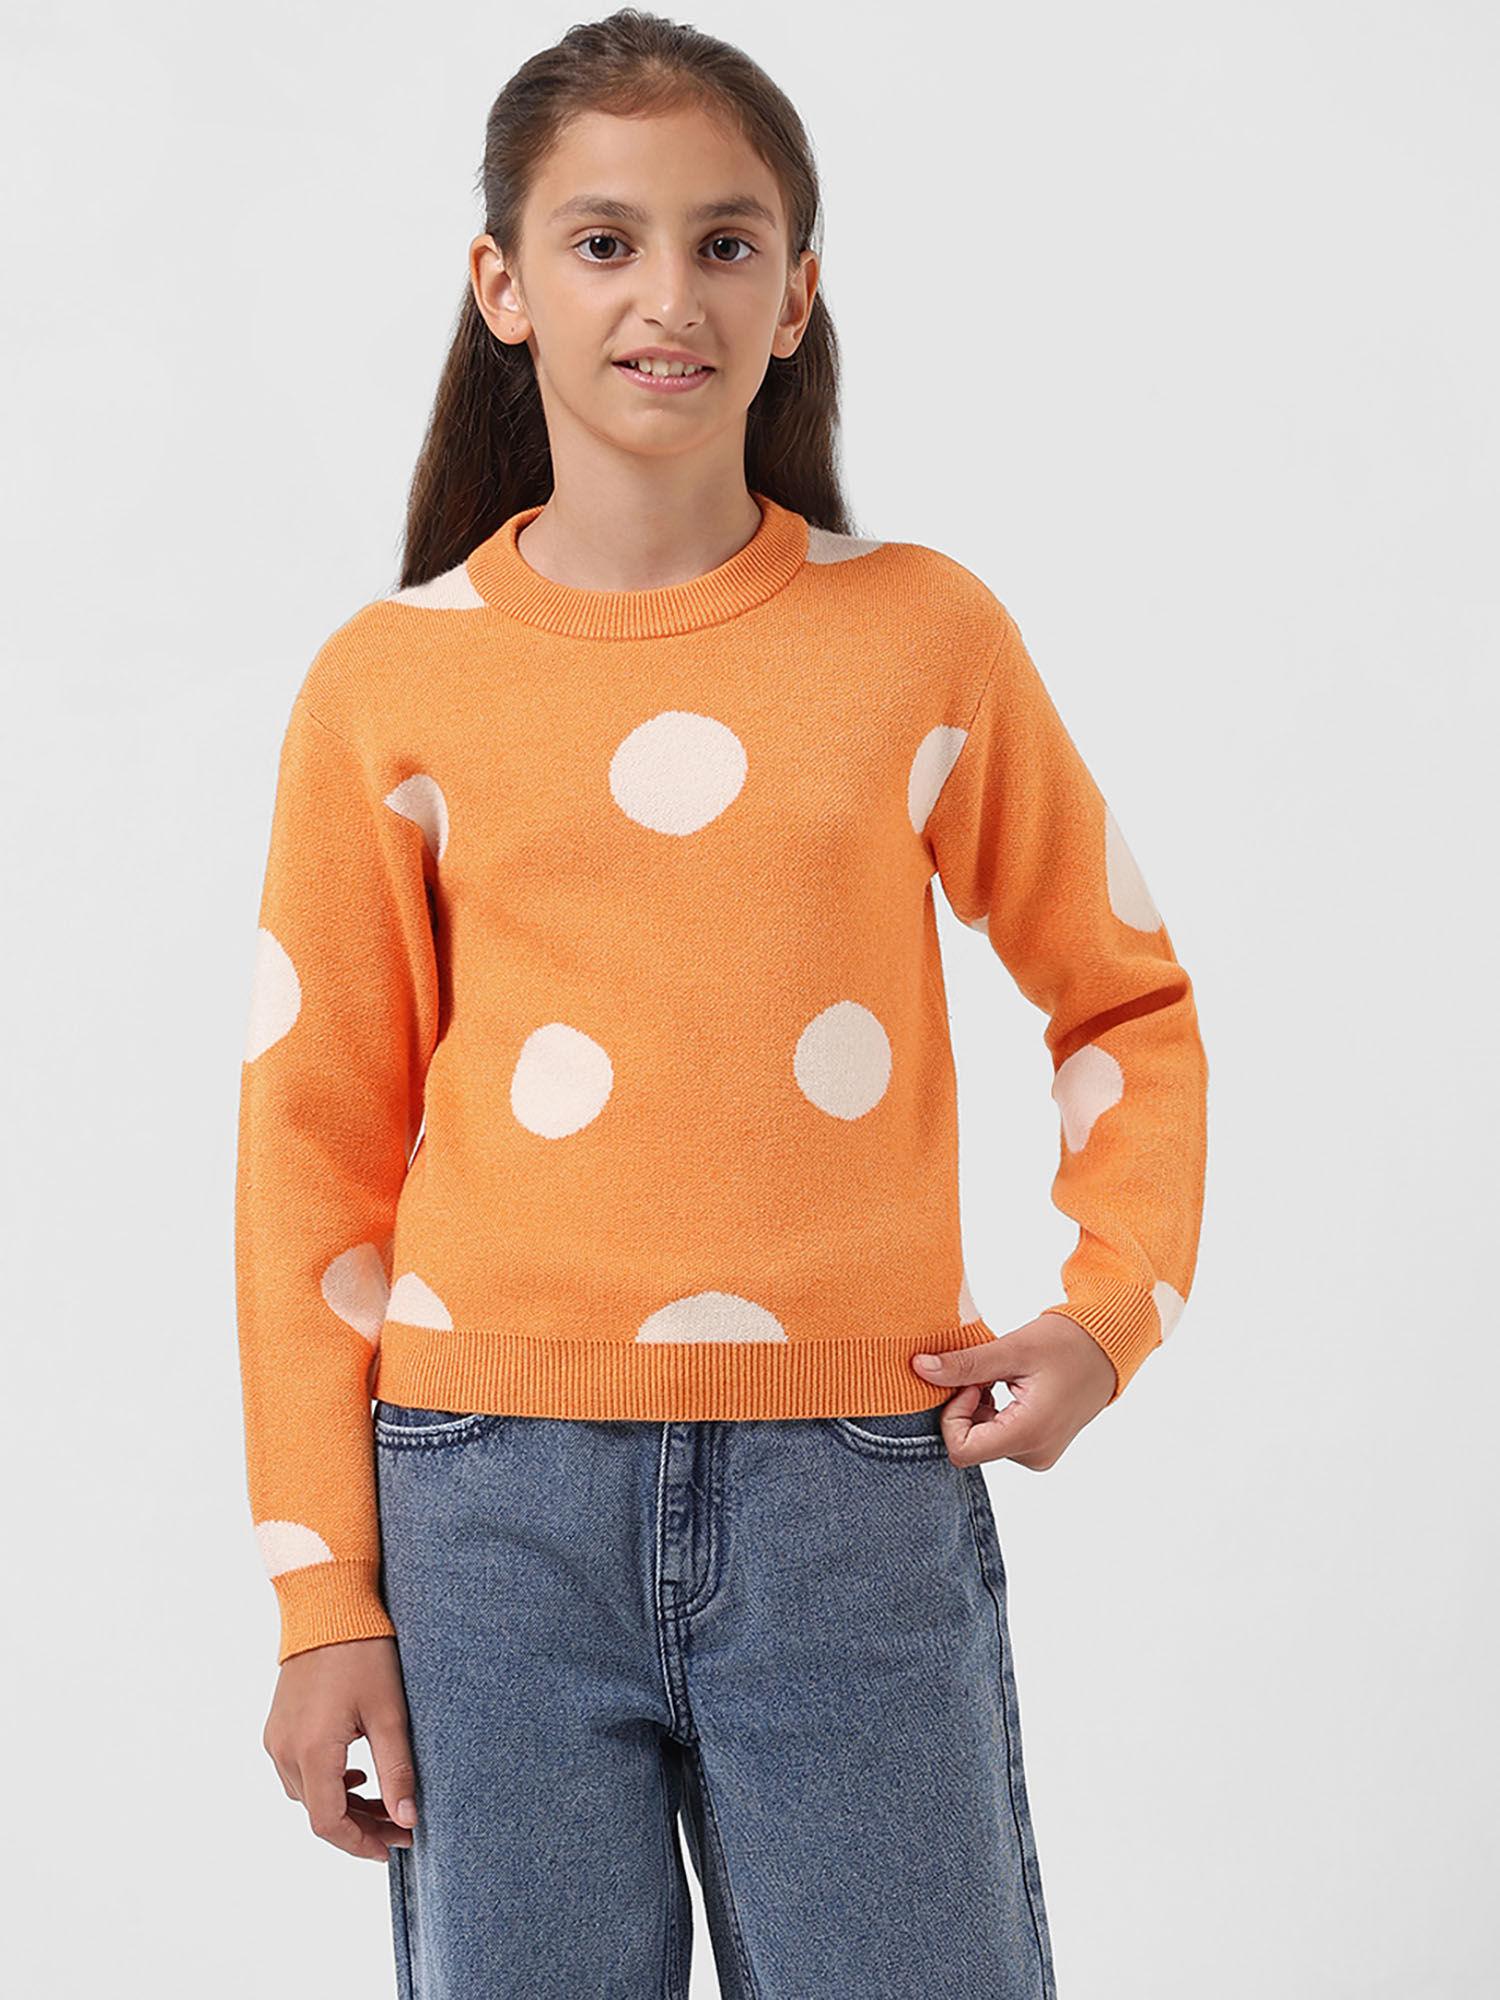 Girls Polka Dots Orange Sweater